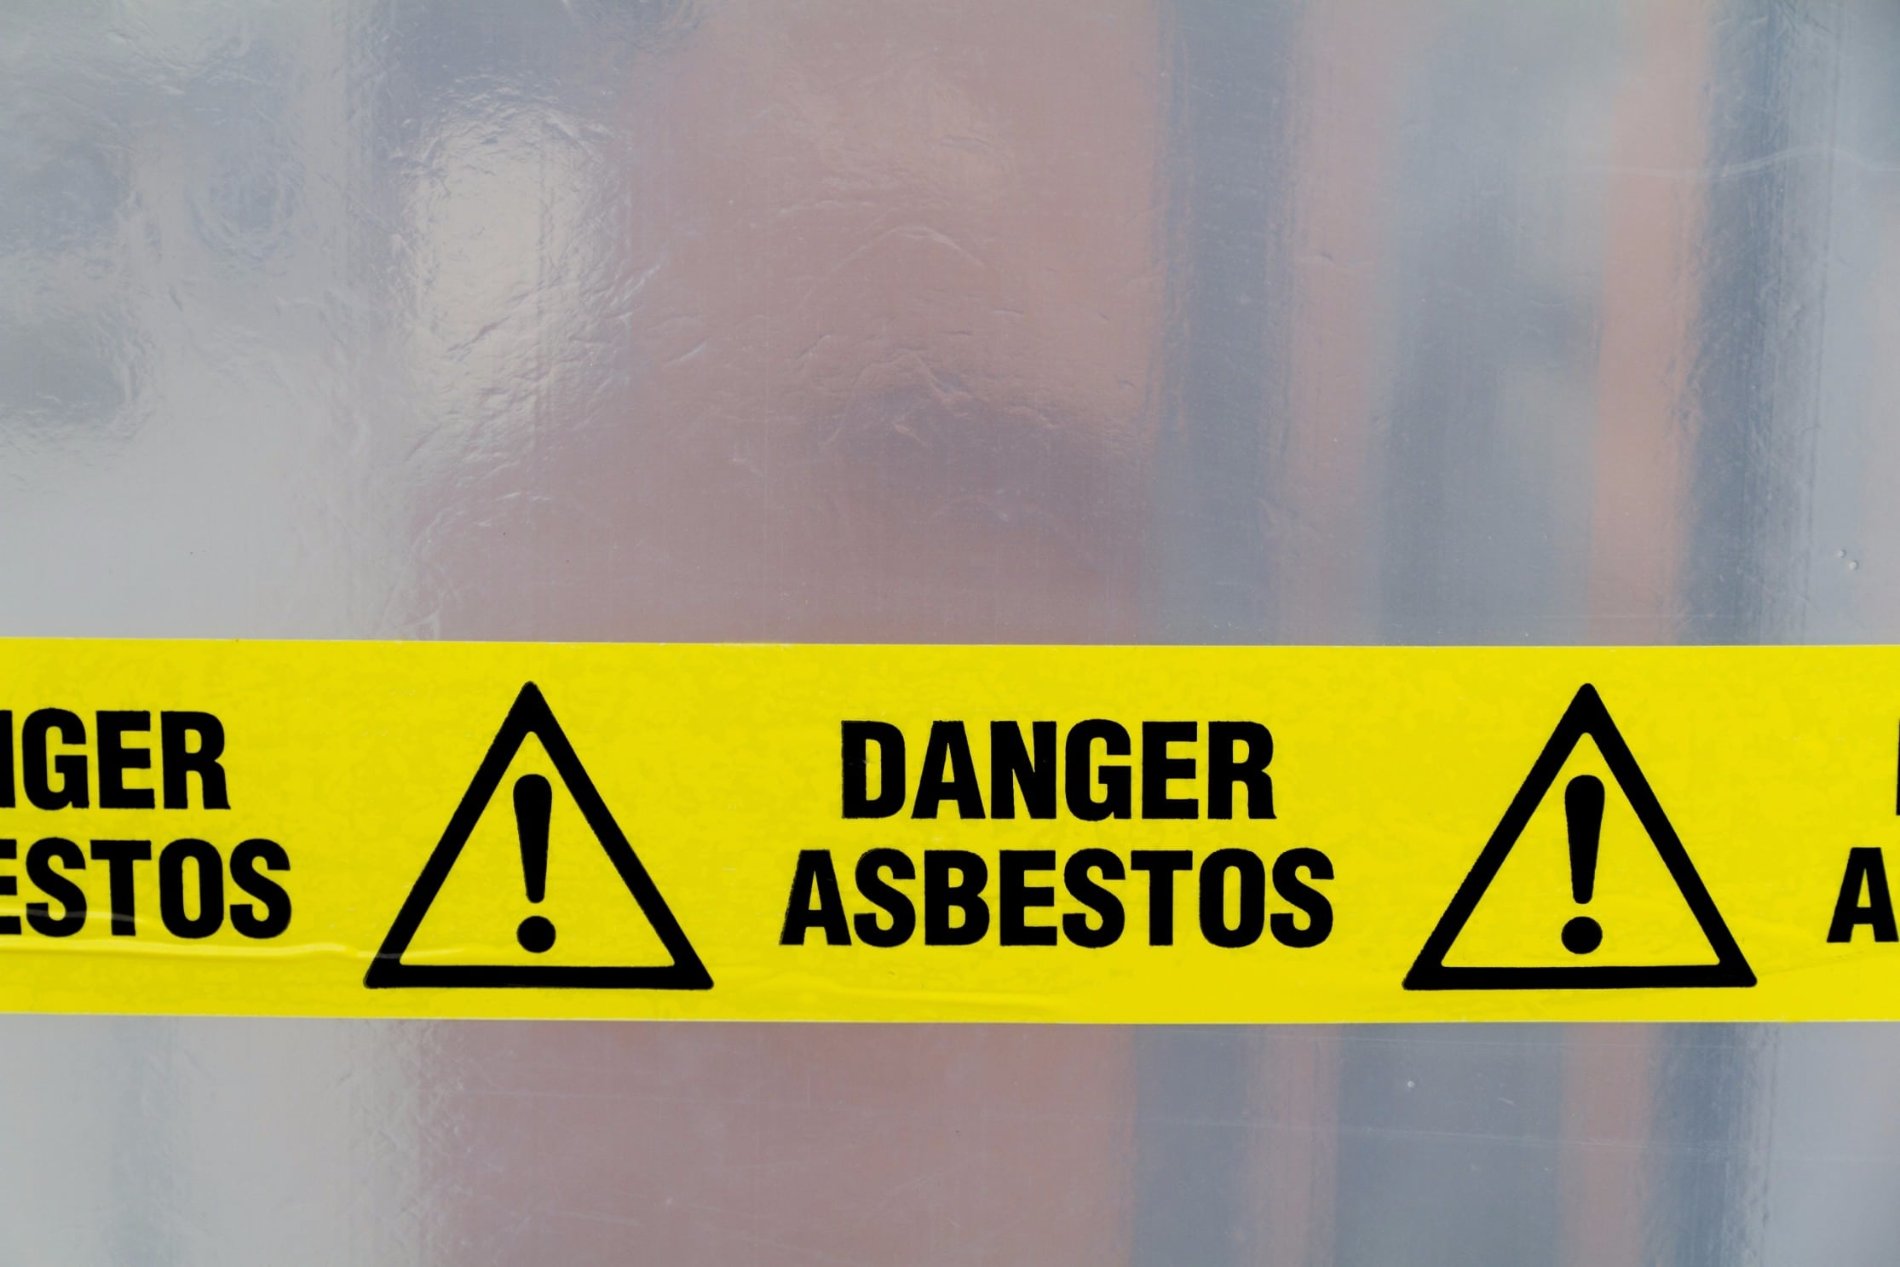 Asbestos surveys & testing in Guildford